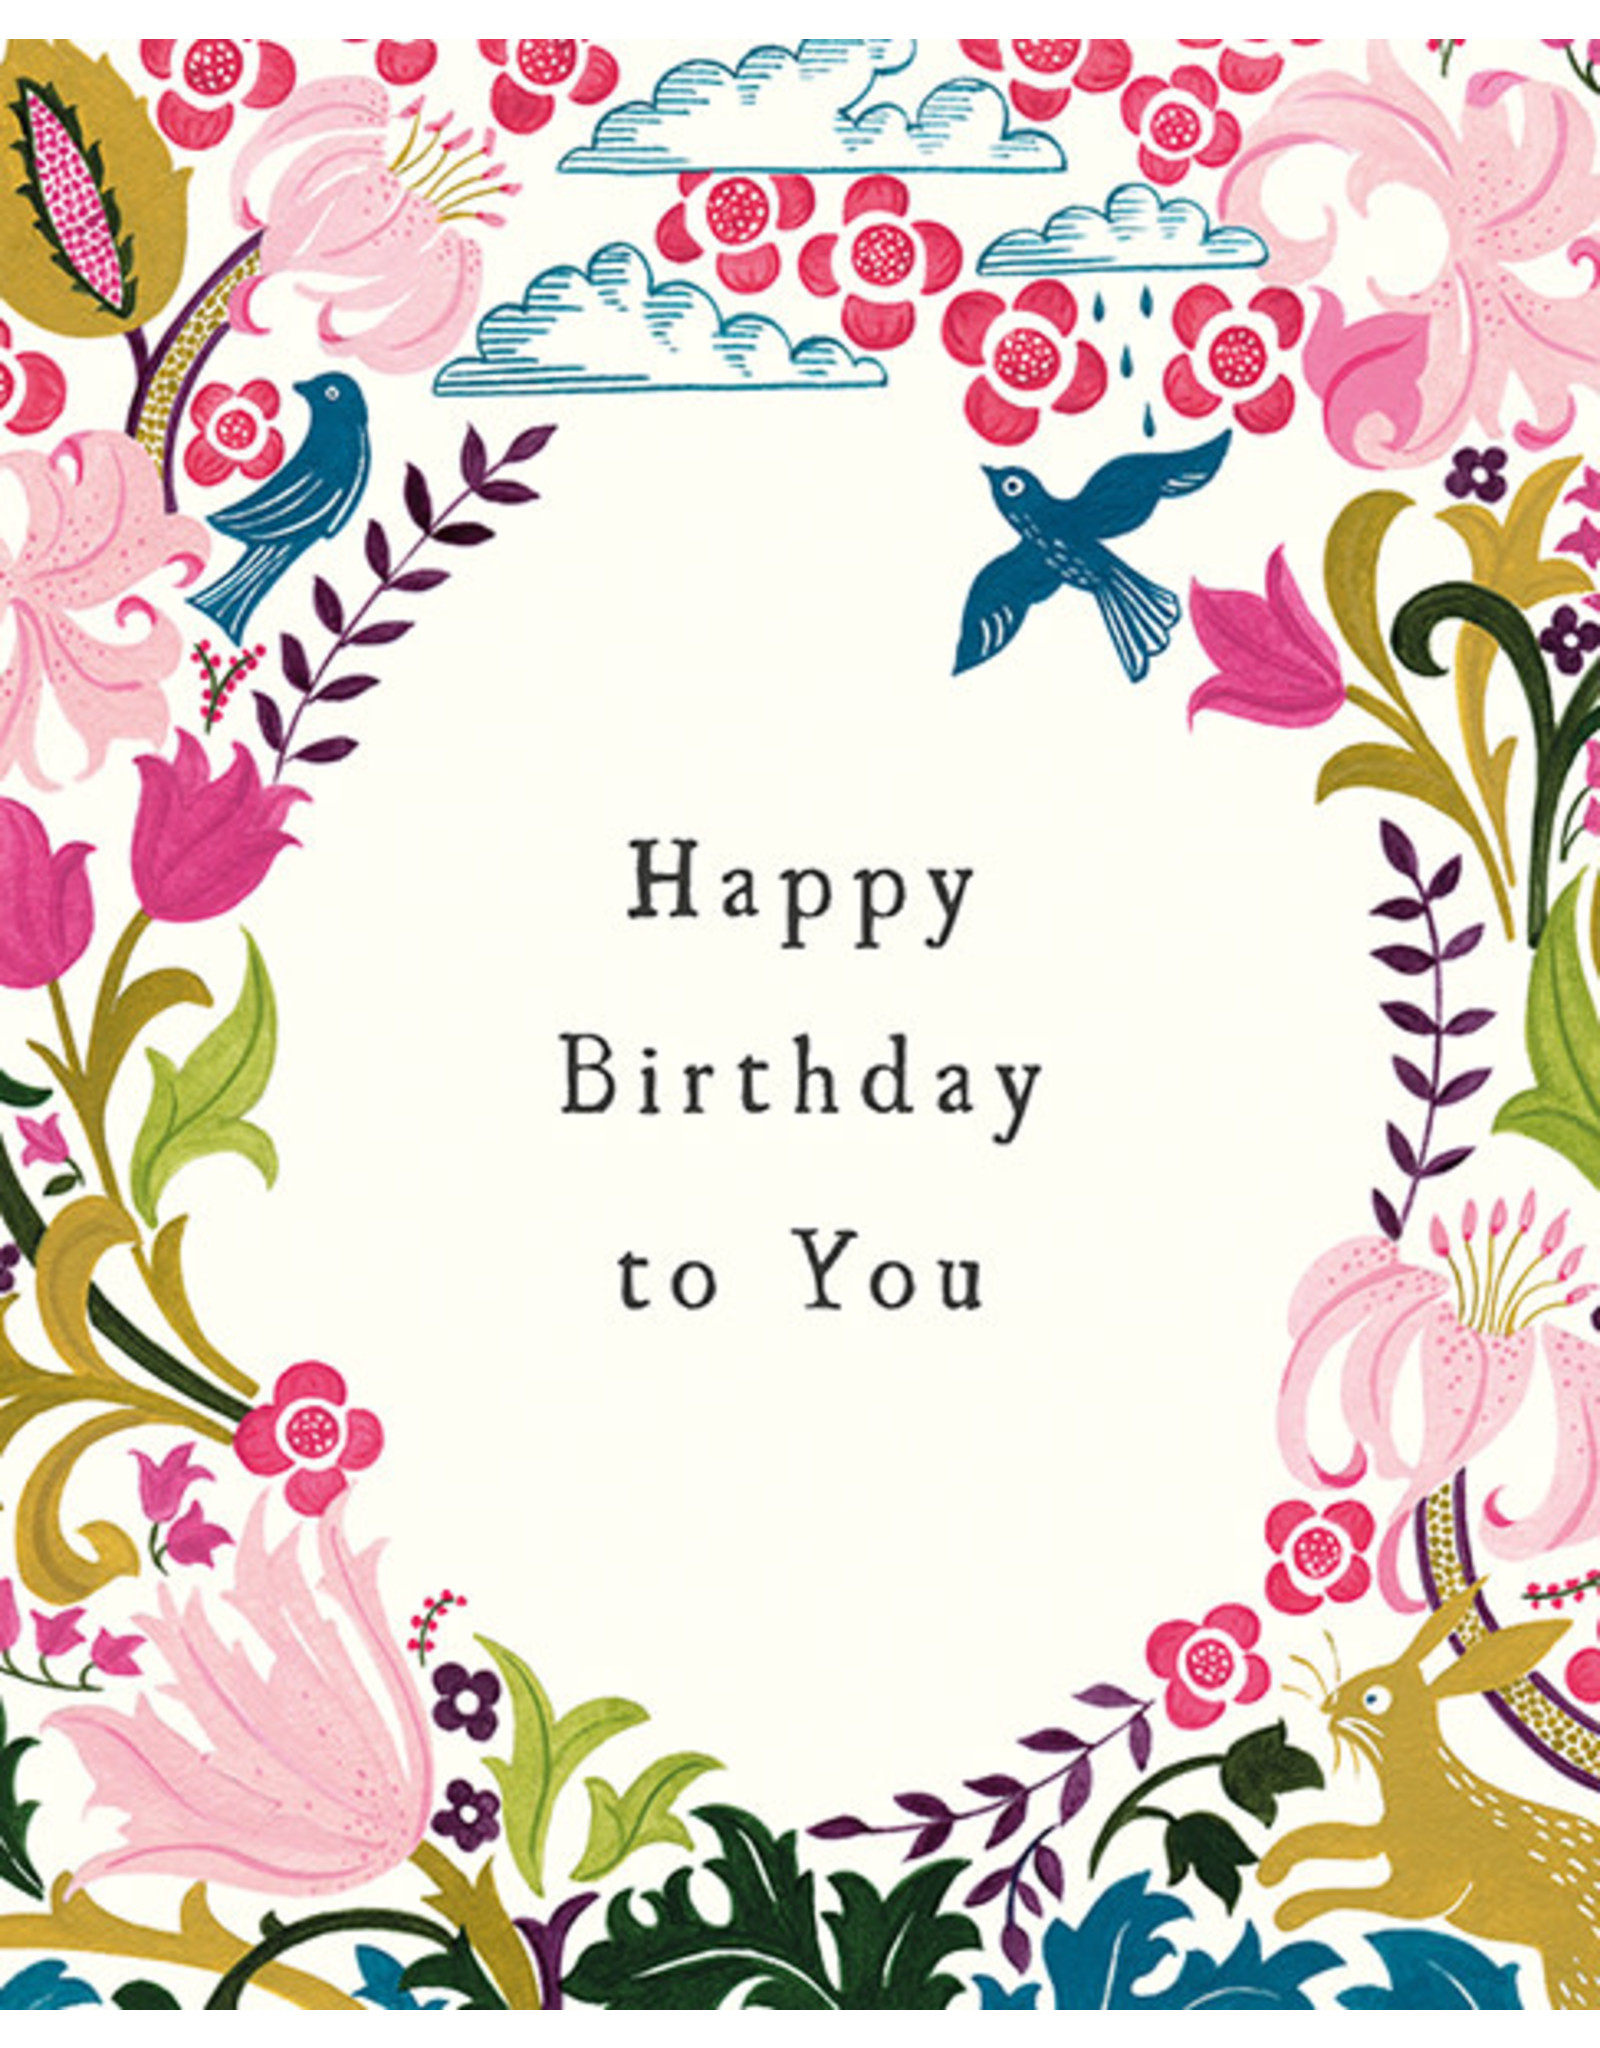 Birthday - Happy Birthday To You - Flowers